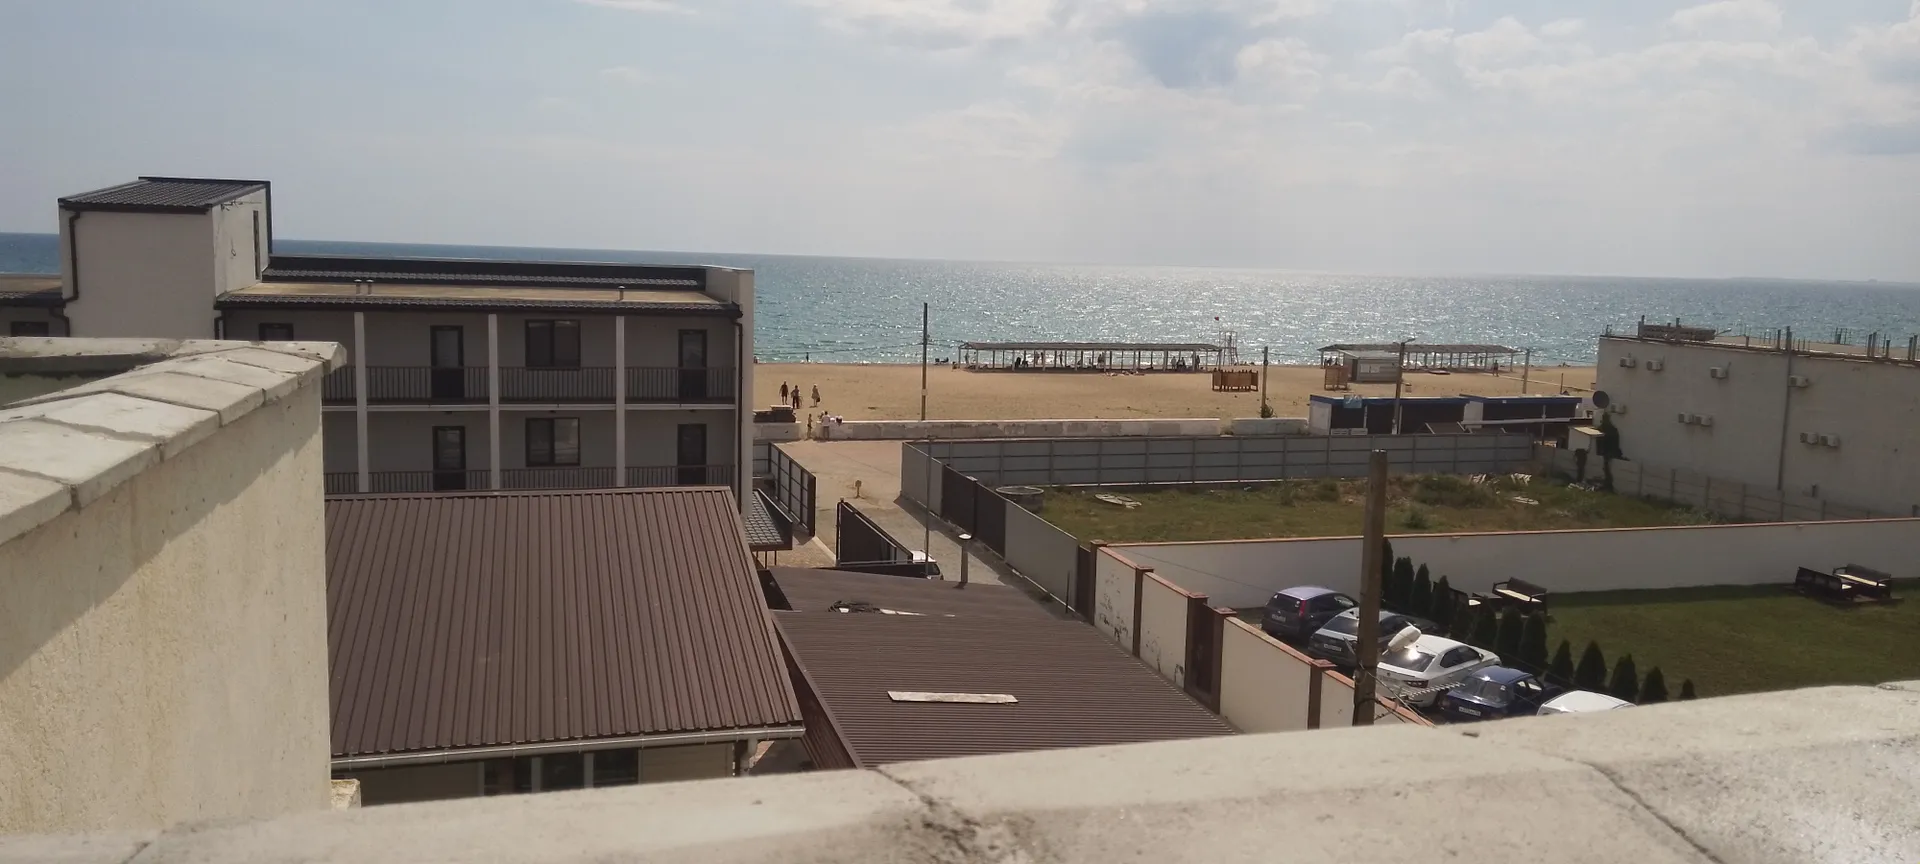 Вид с террасы дома на море и пляж.